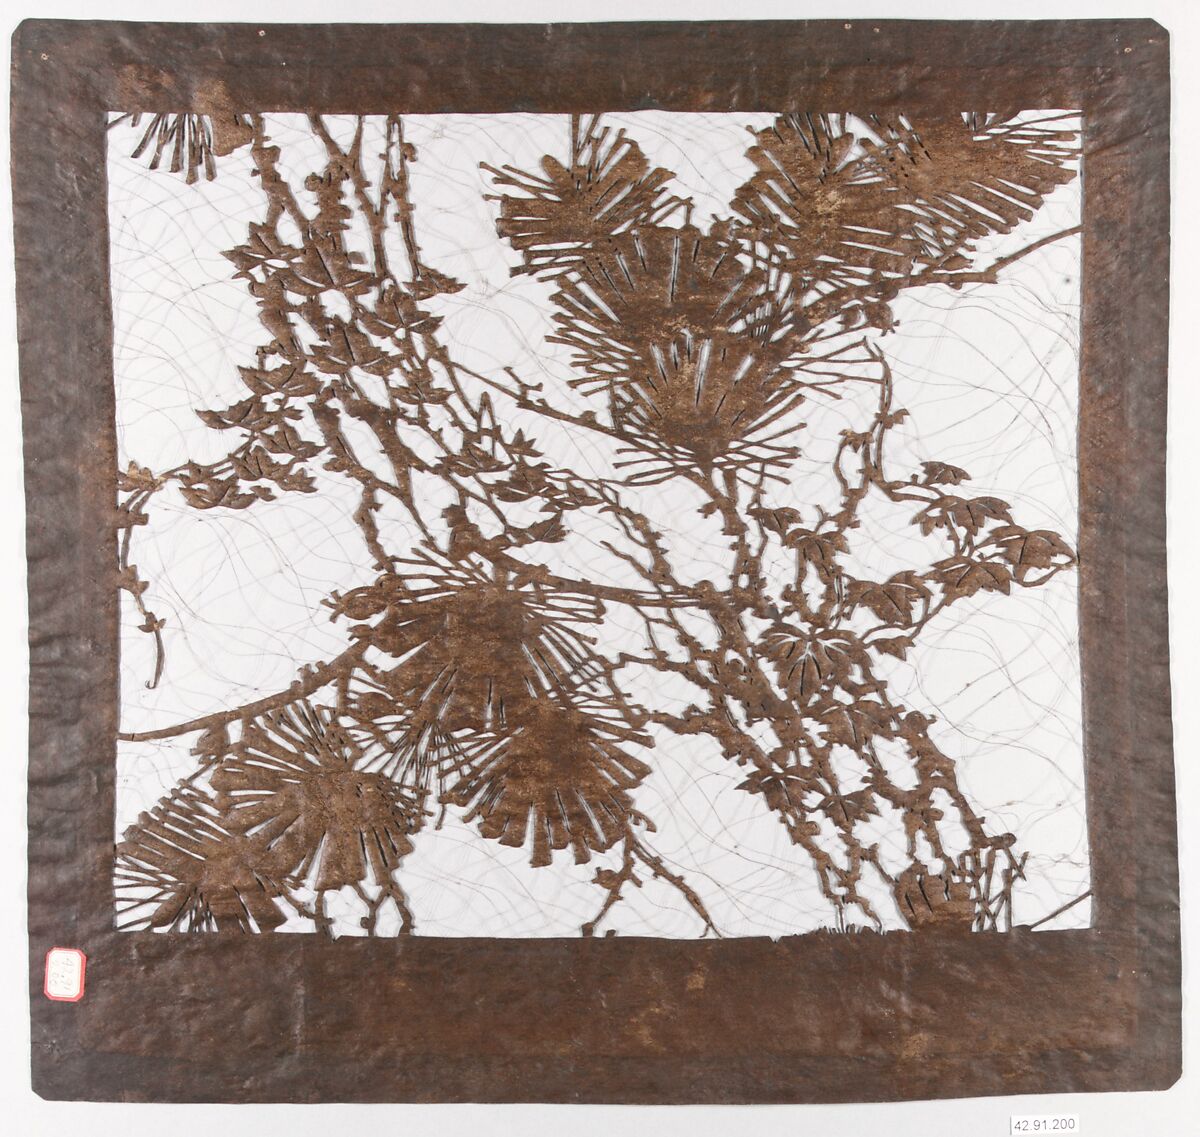 Stencil, Paper, silk, Japan 